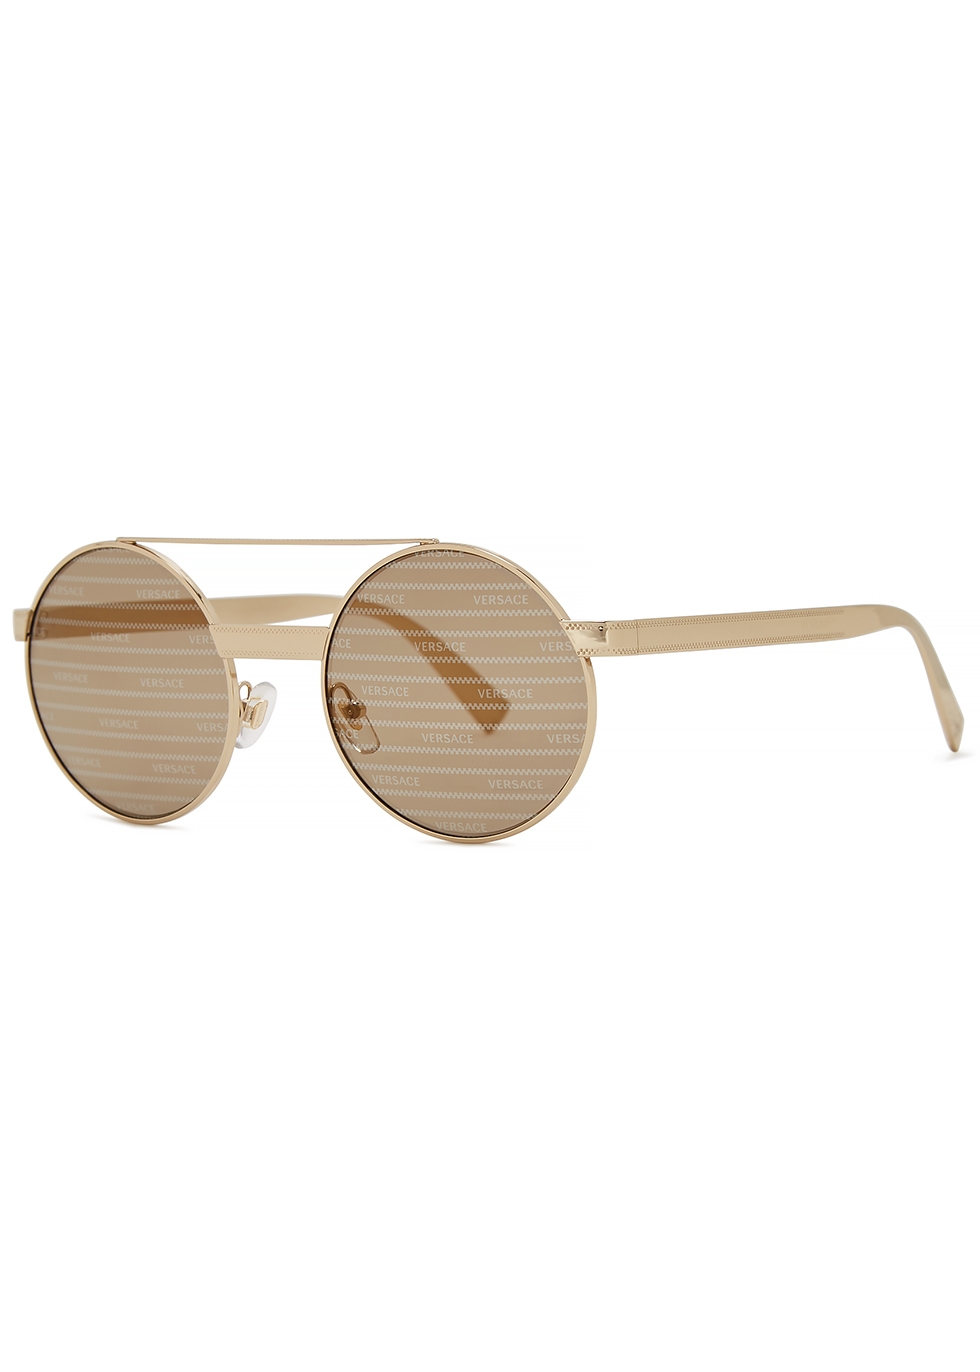 versace sunglasses round